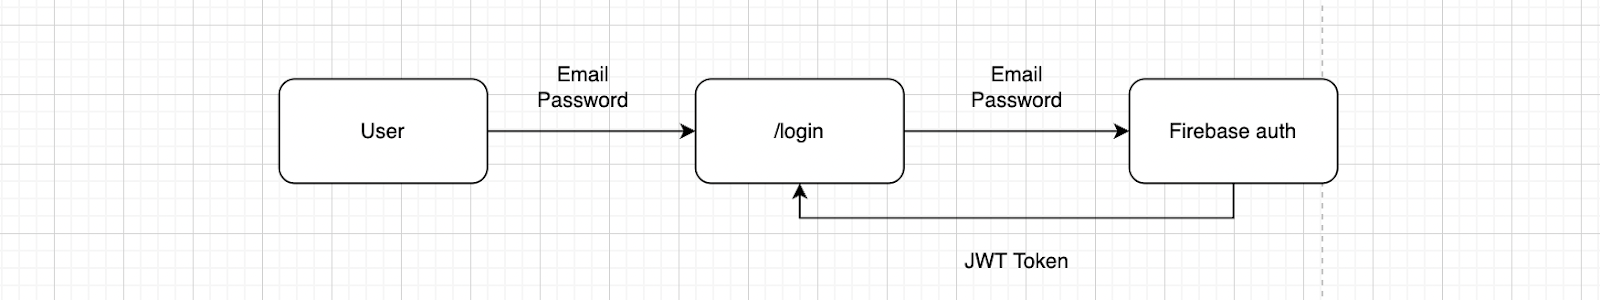 High Level Design Diagram for Login with Pyrebase